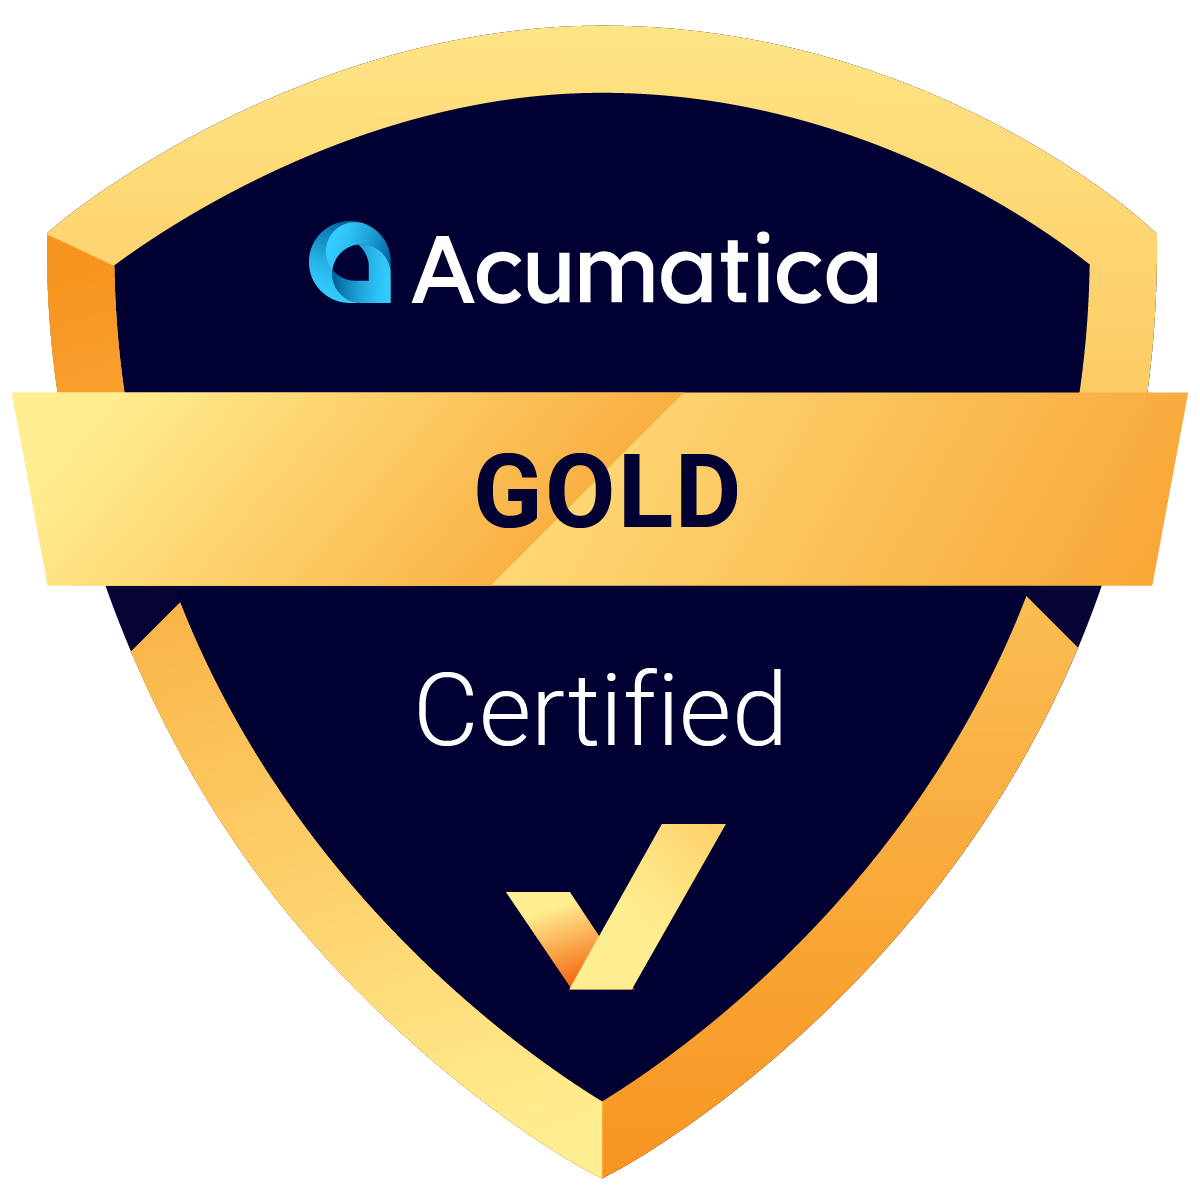 AcuPower LTD. Gold Certified Acumatica Partner Badge